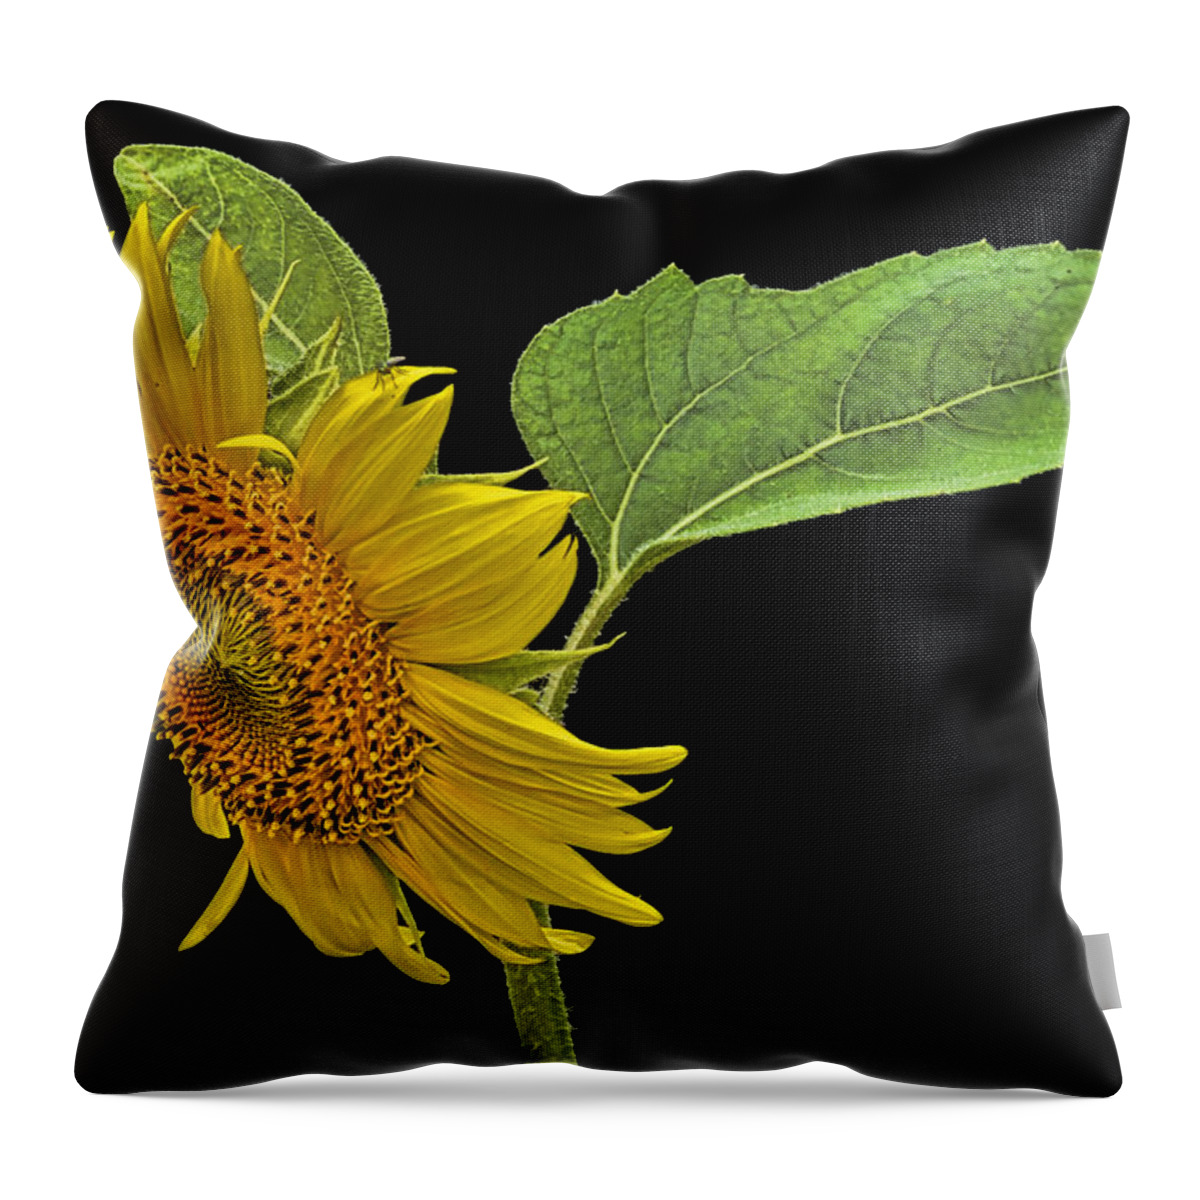 Sunflower Throw Pillow featuring the photograph Sunflower by Don Durfee